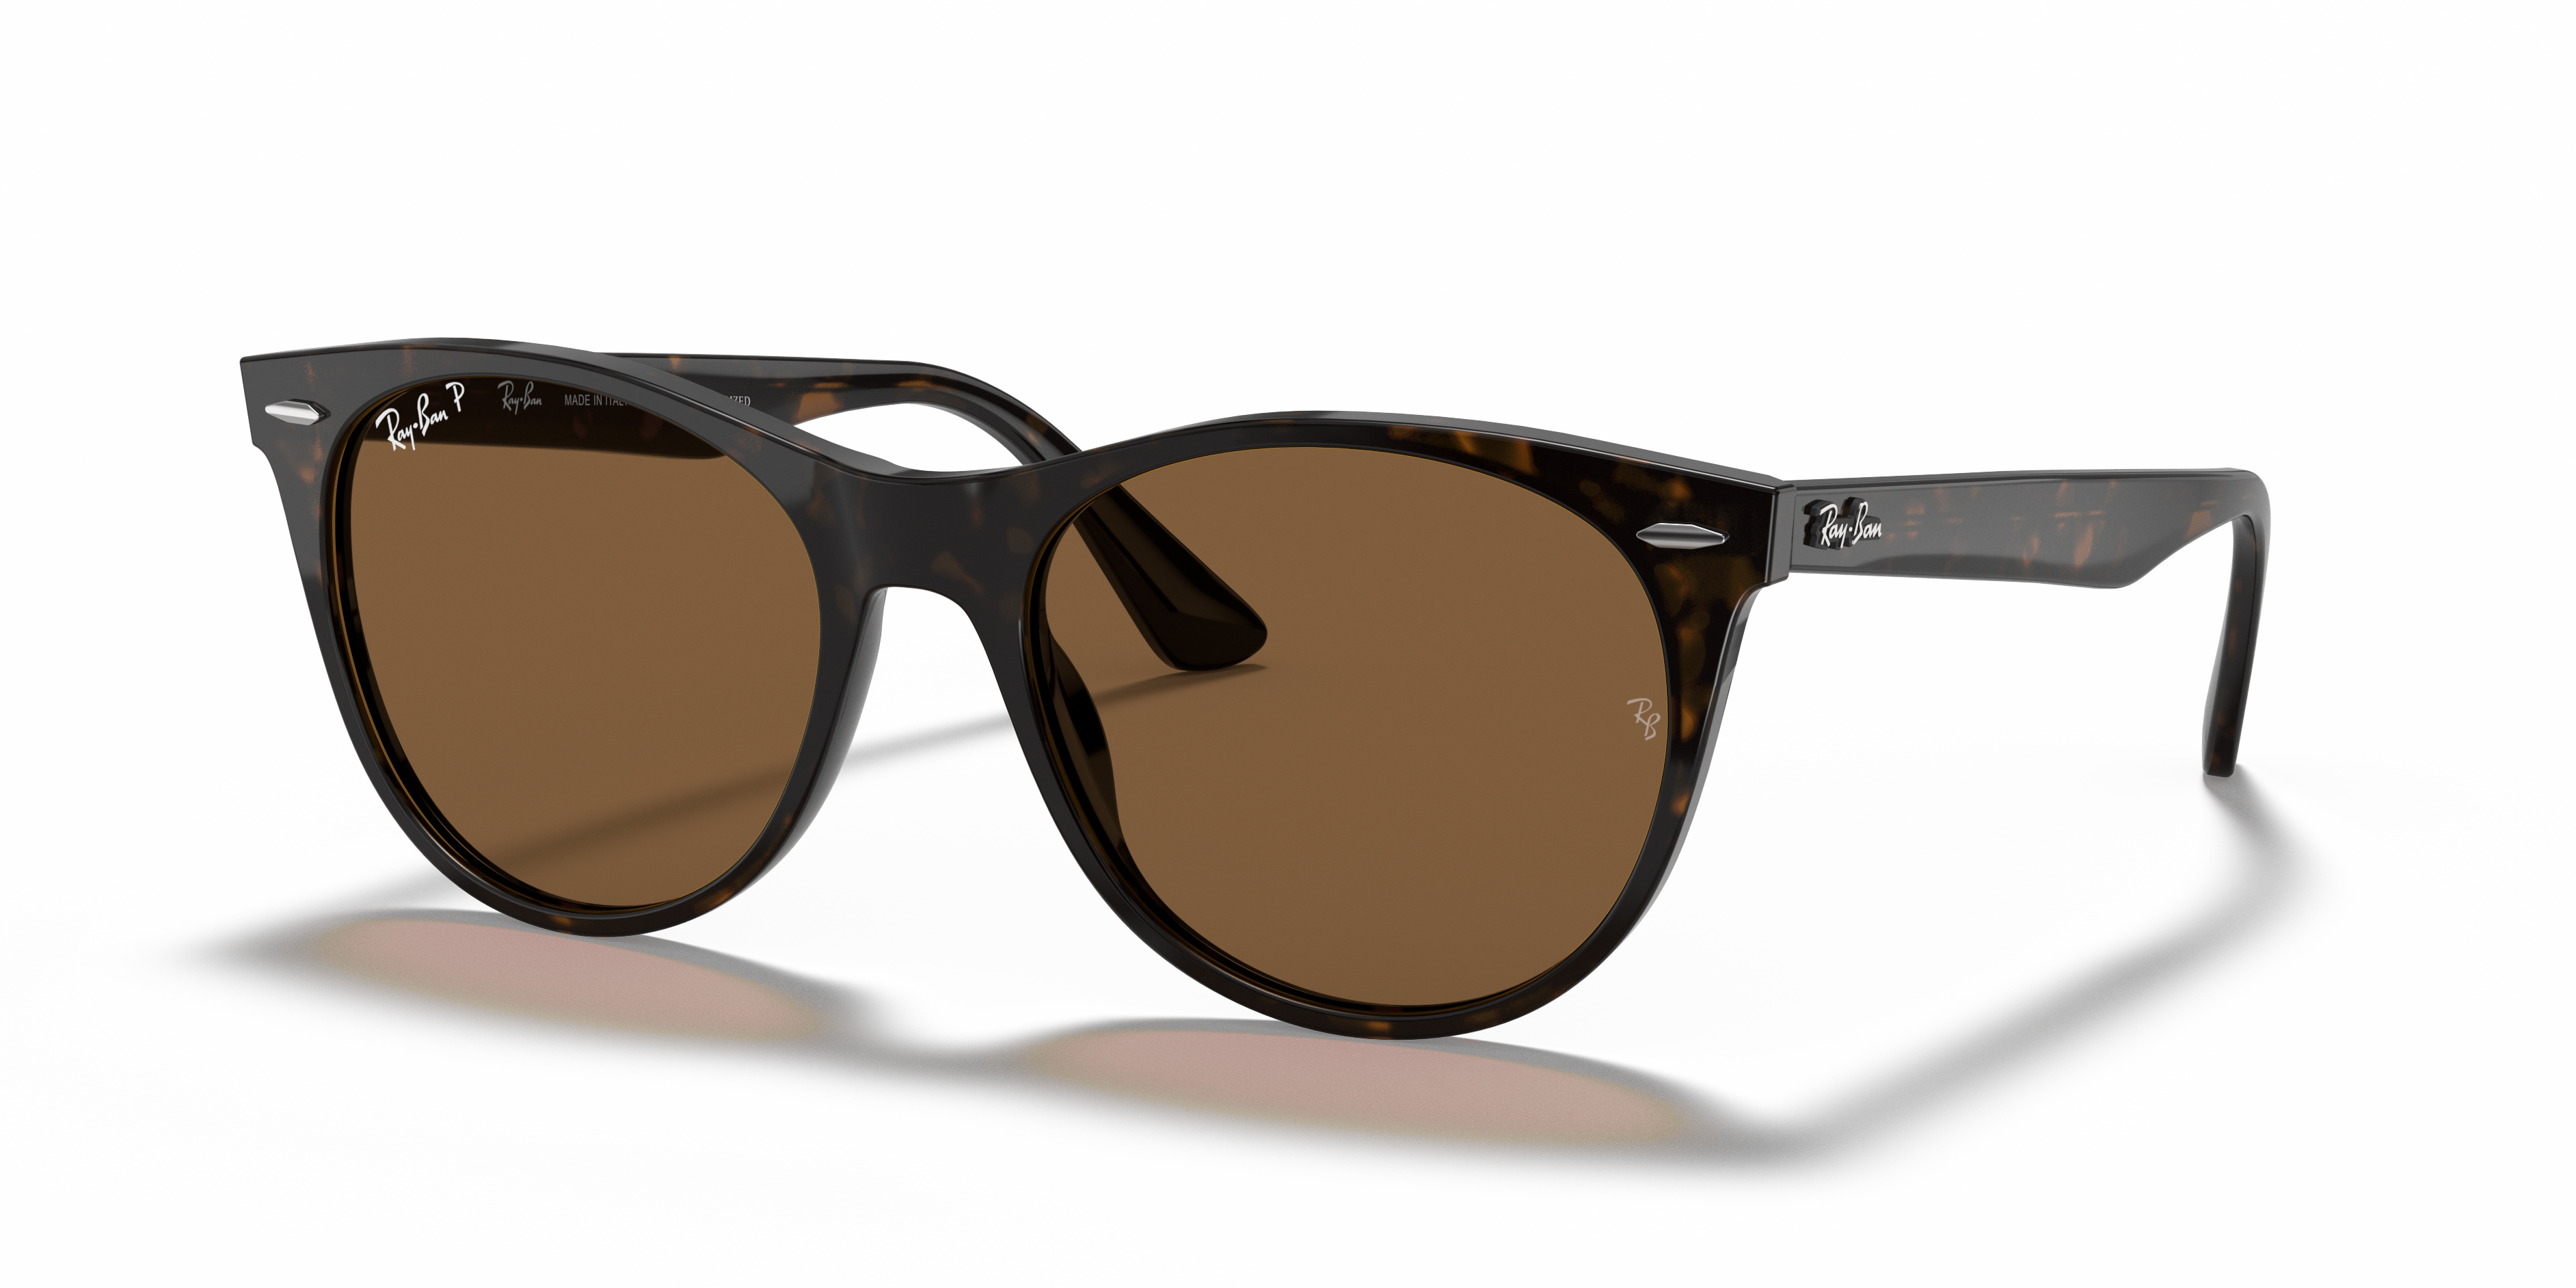 Buy Voyage Black Polarized Wayfarer Sunglasses for Men & Women -  A2015MG4288 Online